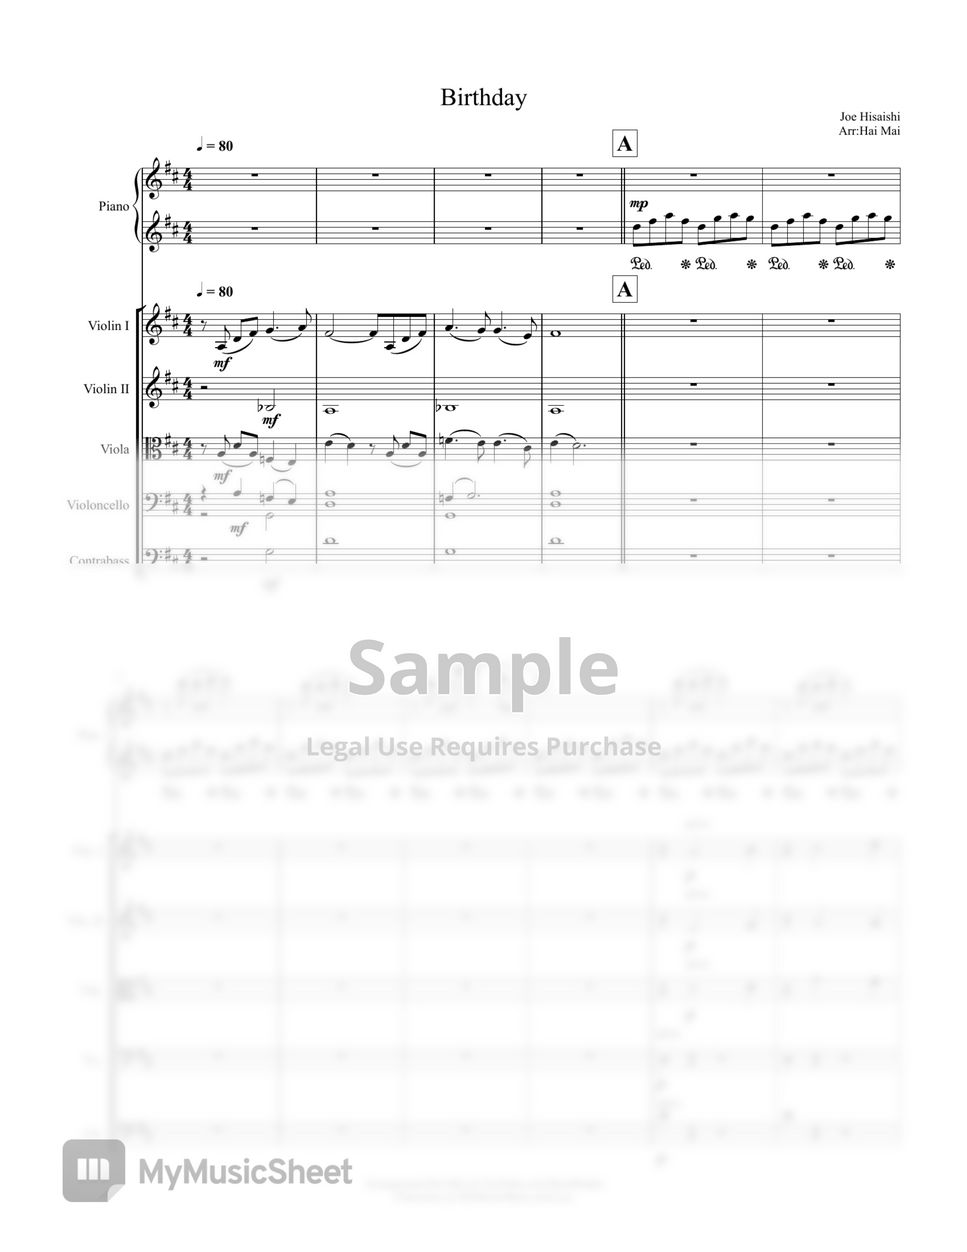 Joe Hisaishi - Birthday for Piano and Orchestra - Score and Part by Hai Mai